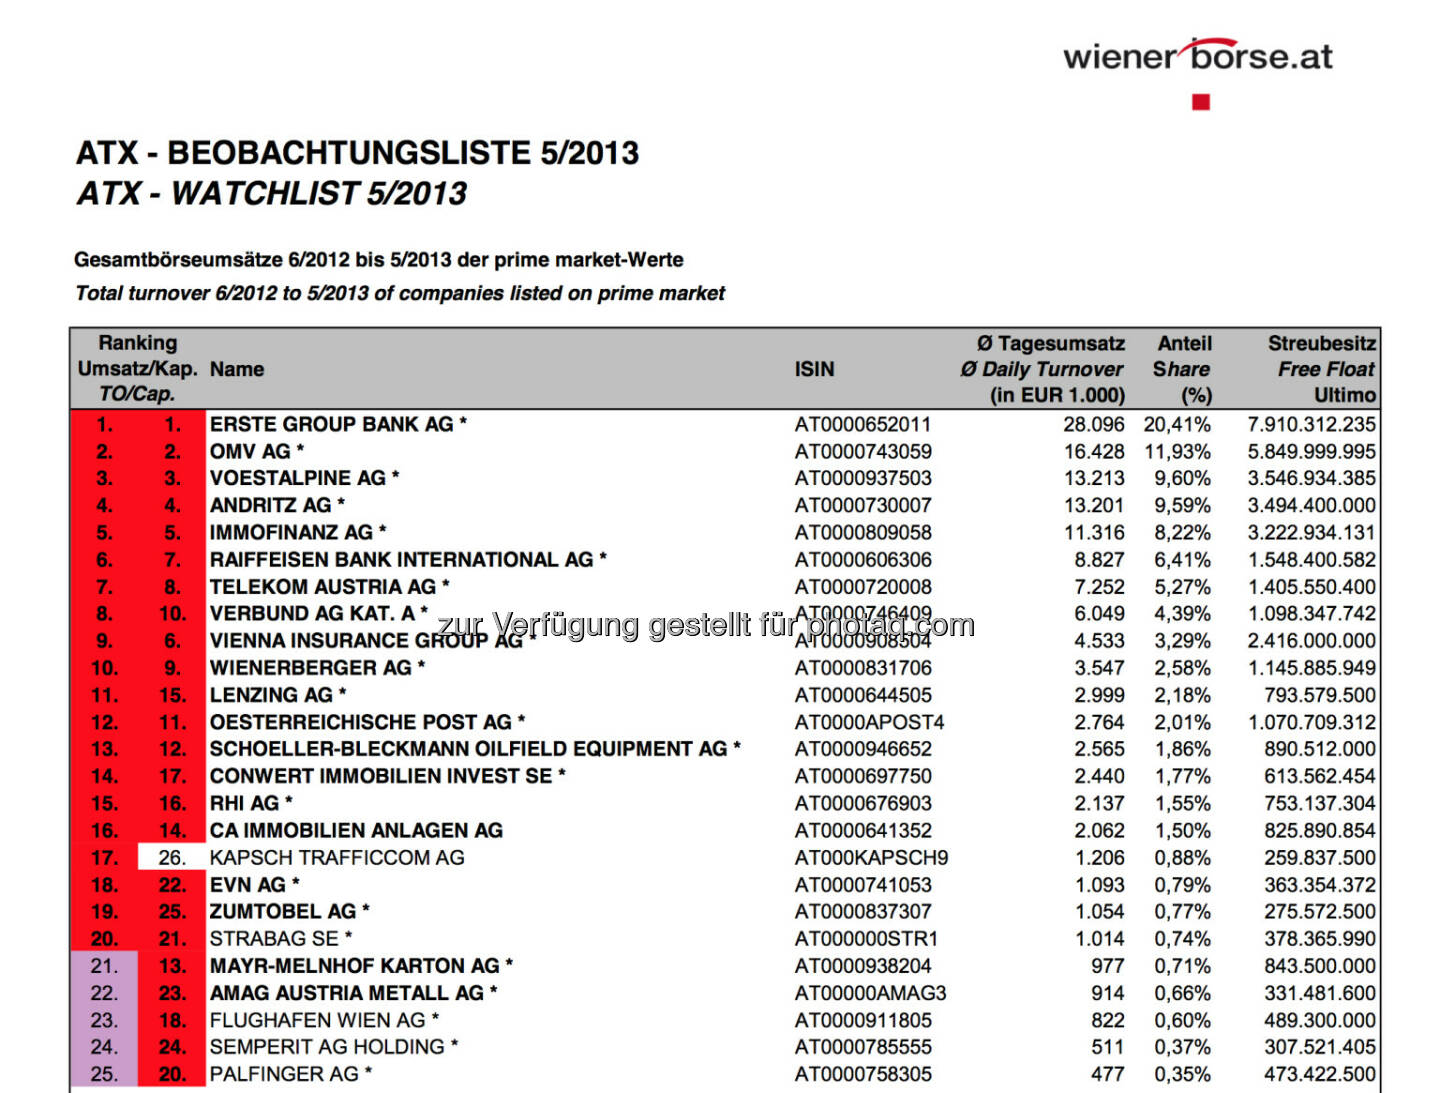 ATX-Beobachtungliste 5/2013 (c) Wiener Börse